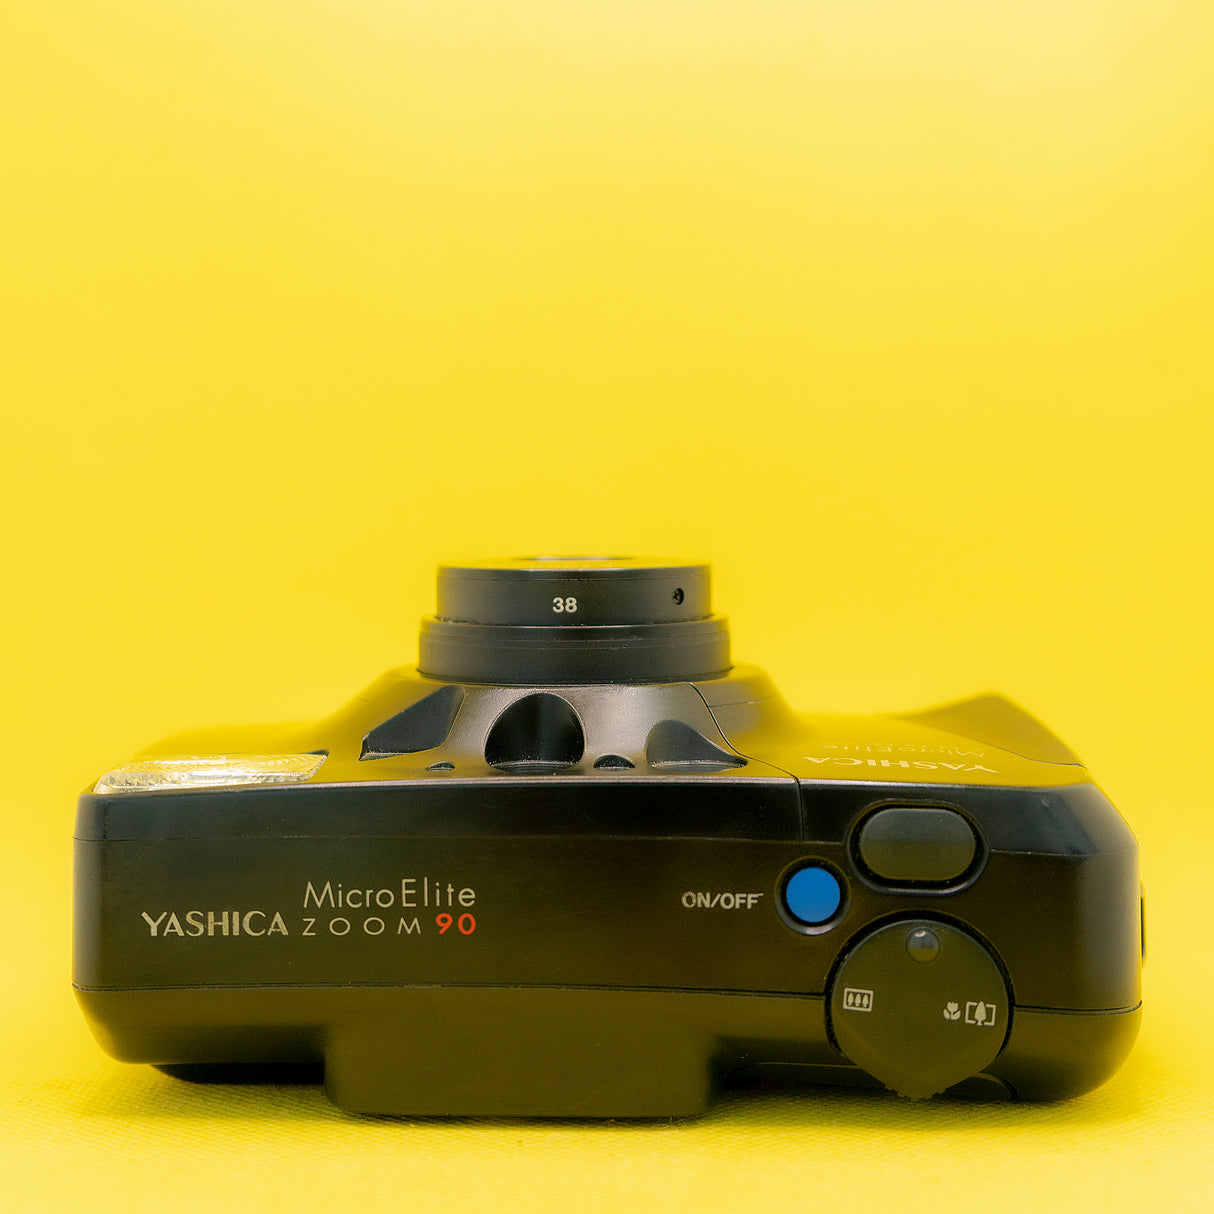 Yashica MicroElite Zoom 90 - 35mm Zoom Compact Film Camera